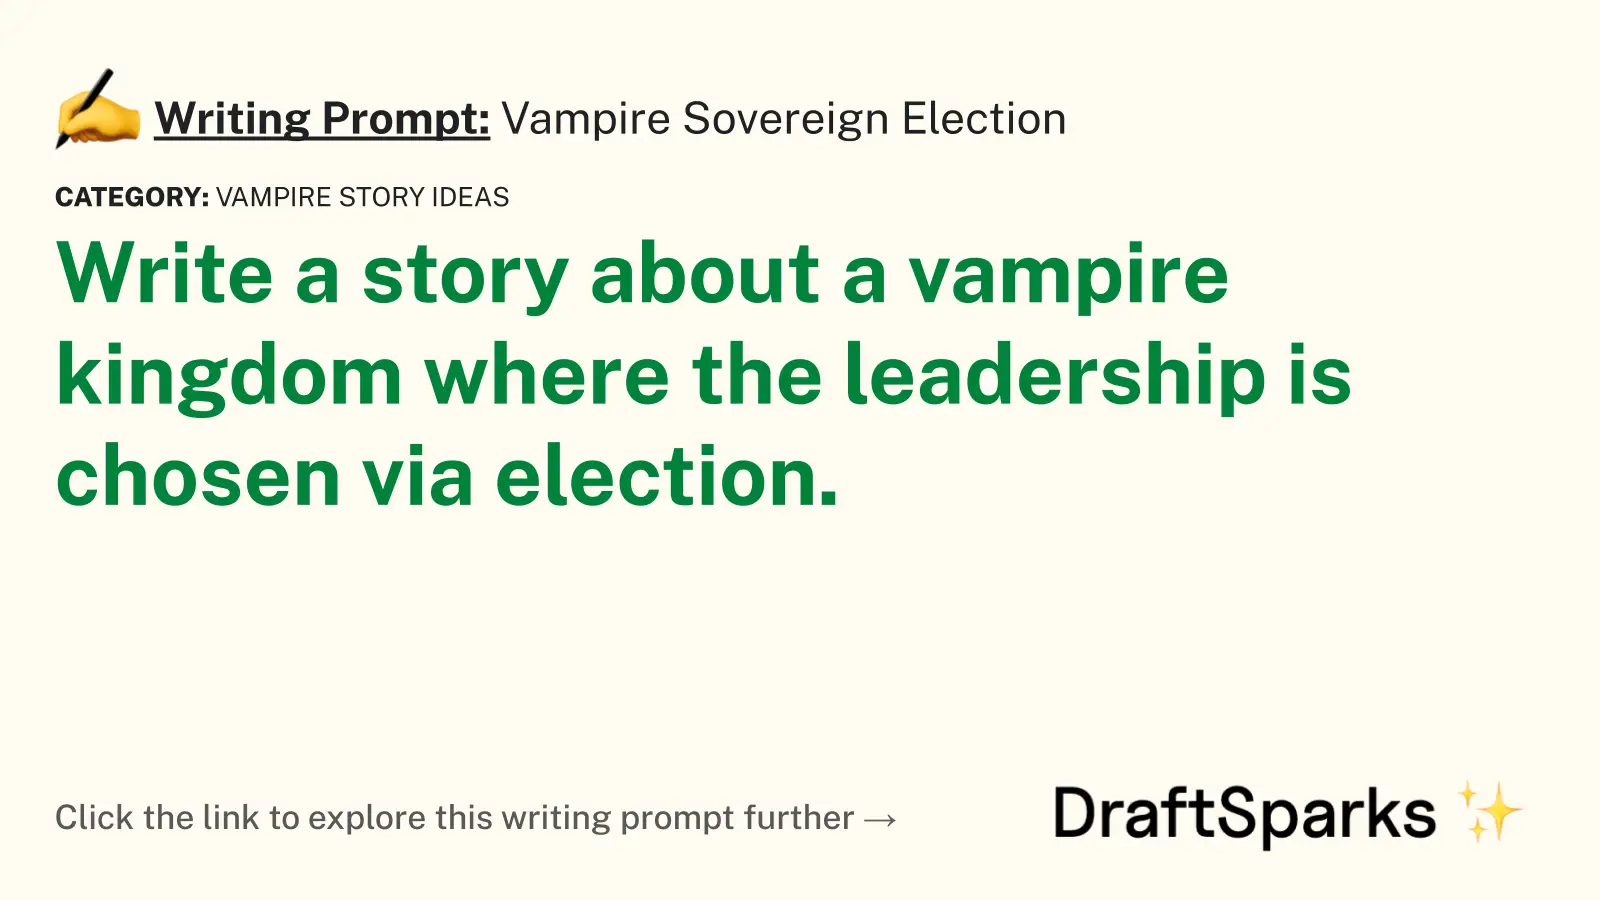 Vampire Sovereign Election